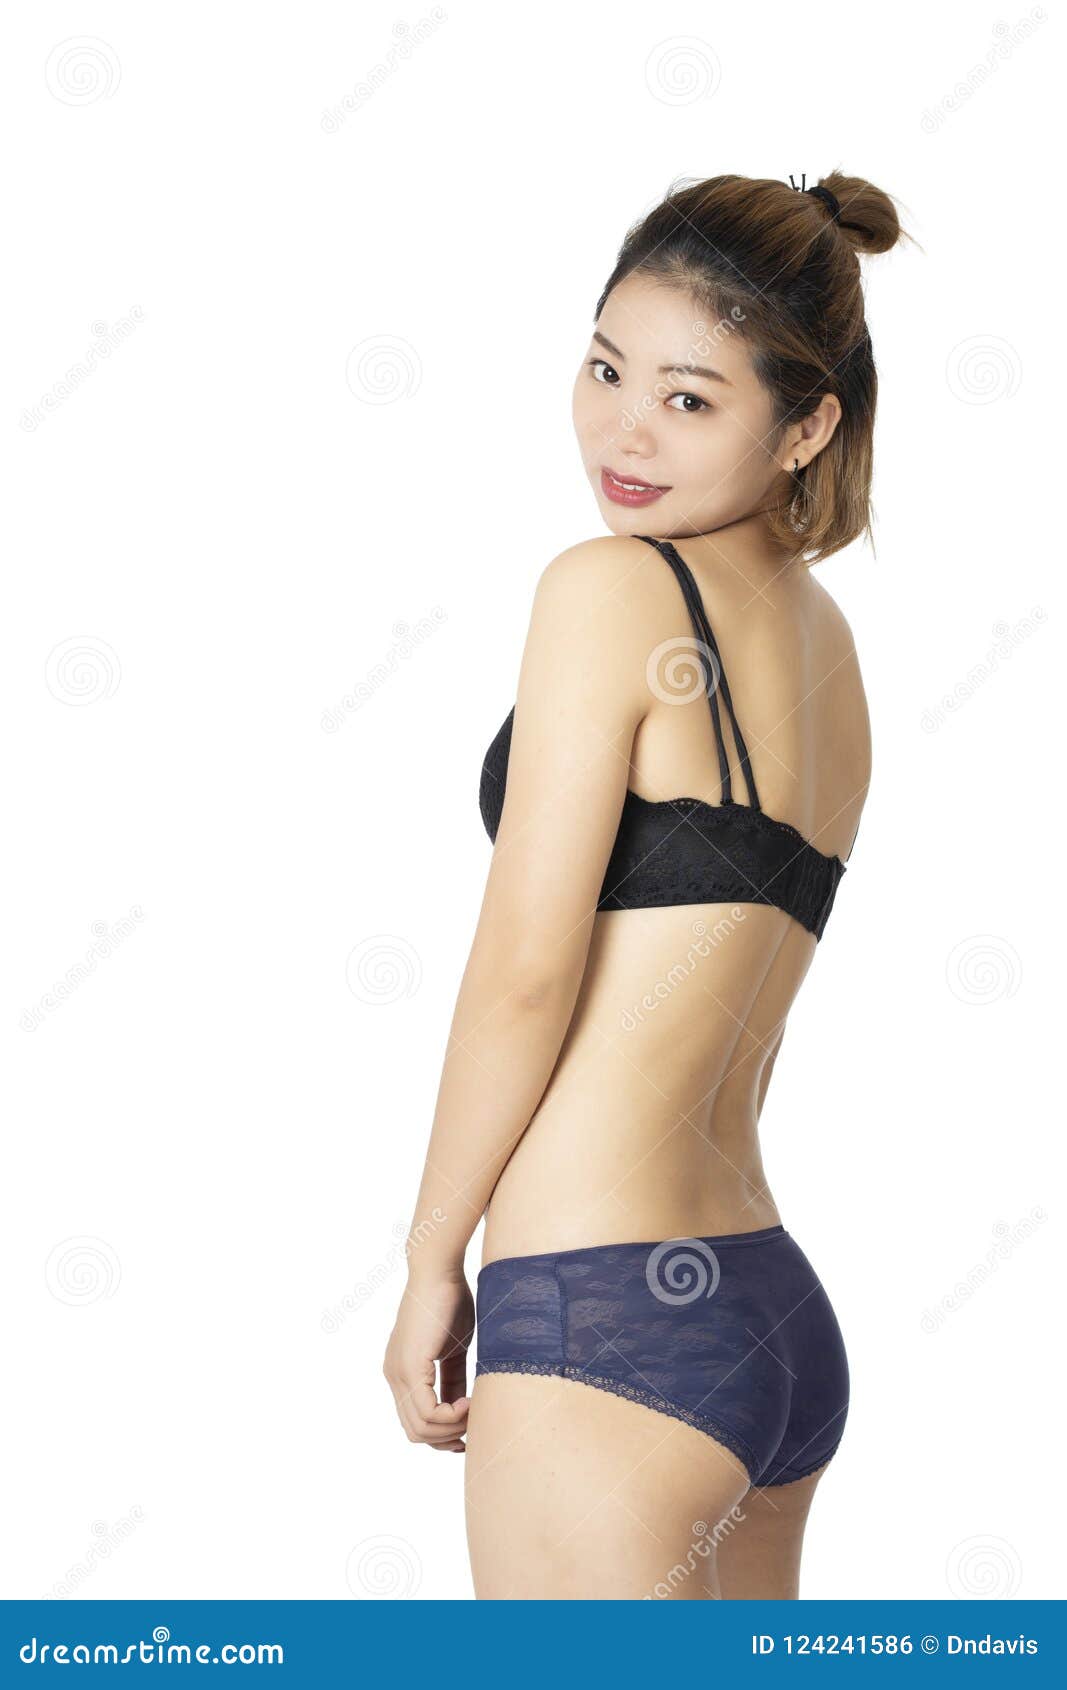 benjamin dcosta recommends asian woman in panties pic